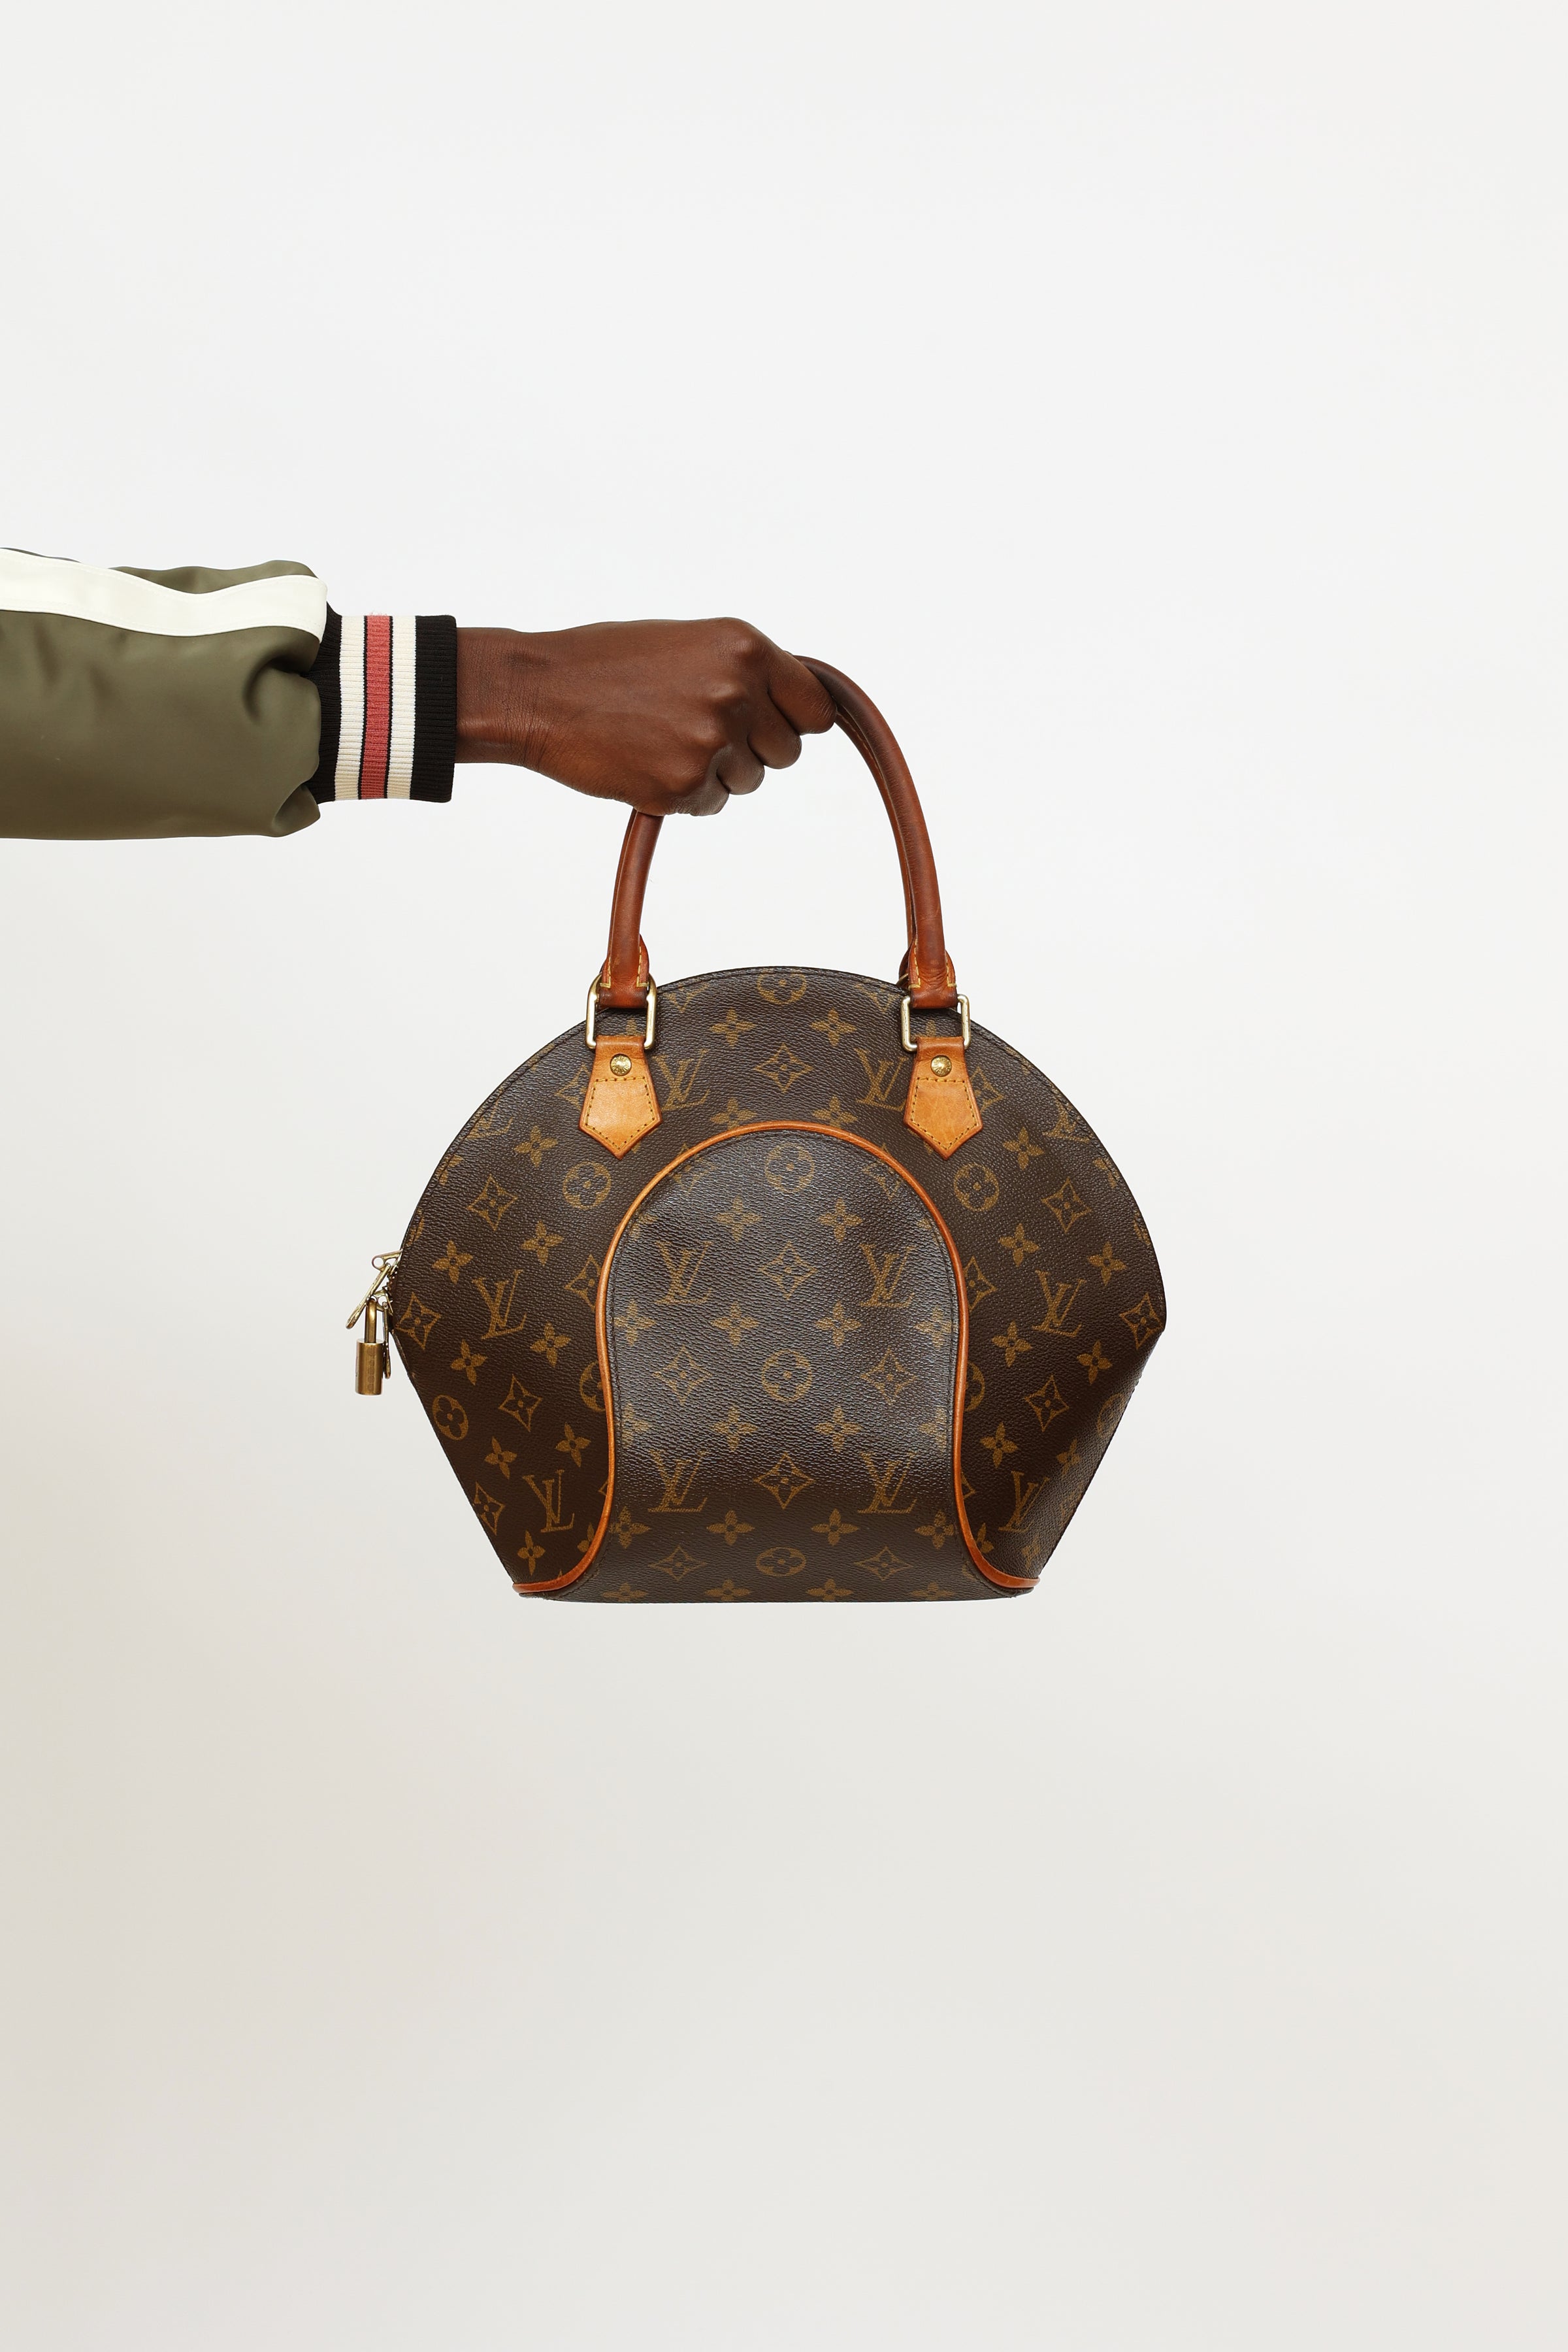 Pre-Owned Louis Vuitton Ellipse Monogram MM Handbag - Very Good Condition 